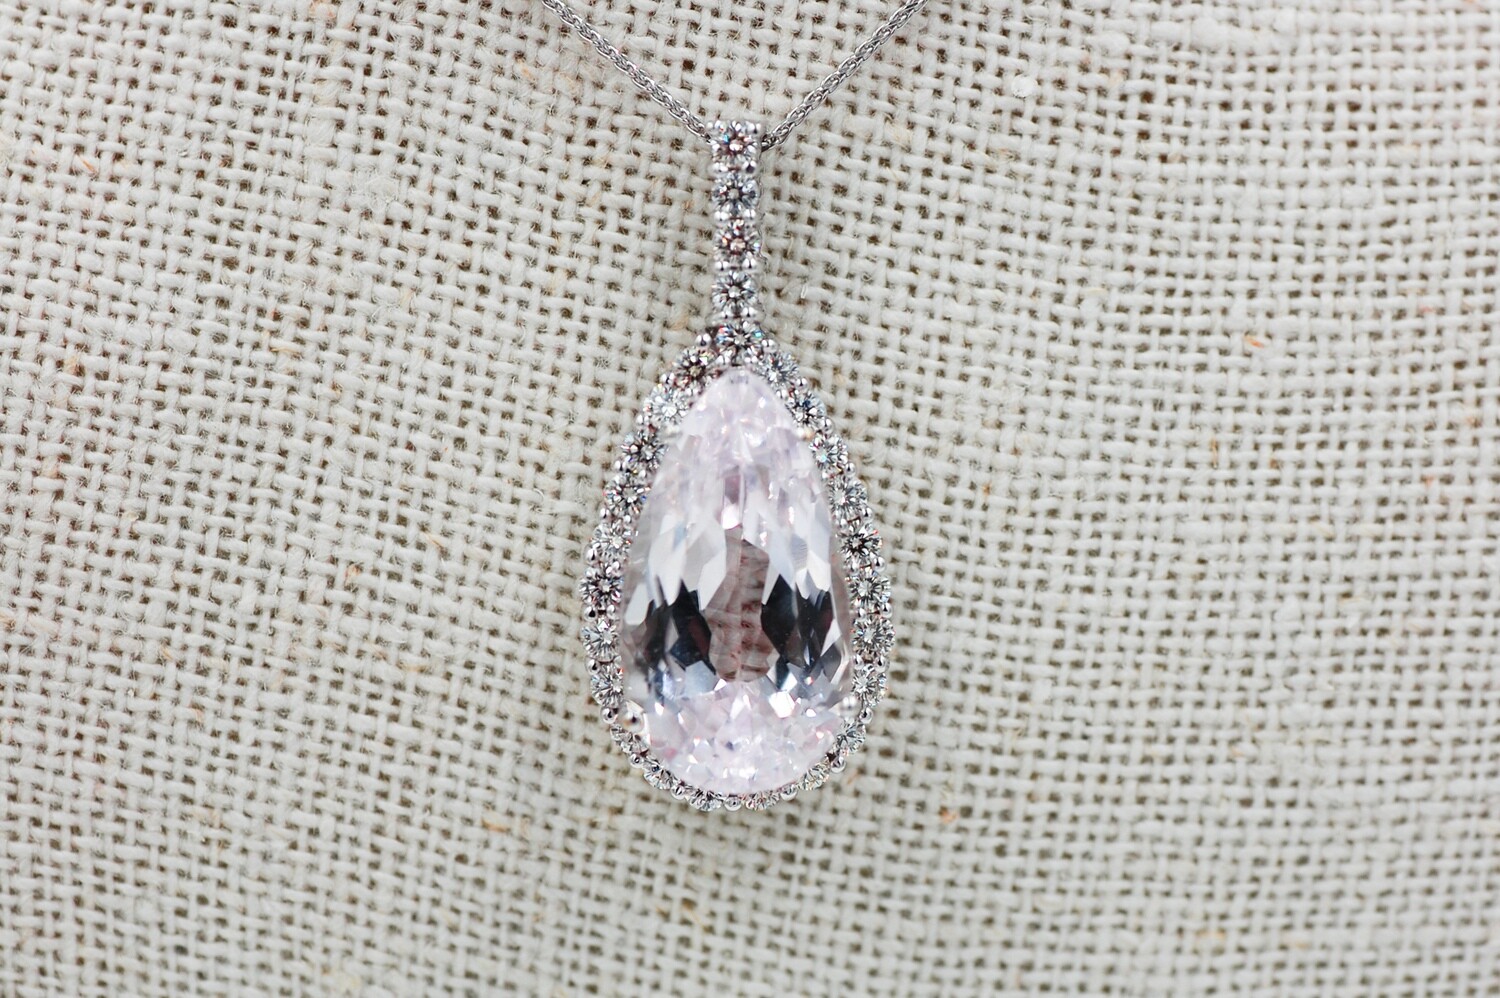 18k wg Pear shape 11.98ct Kunzite pendant w/ .89cttw diamond accents - 18" chain